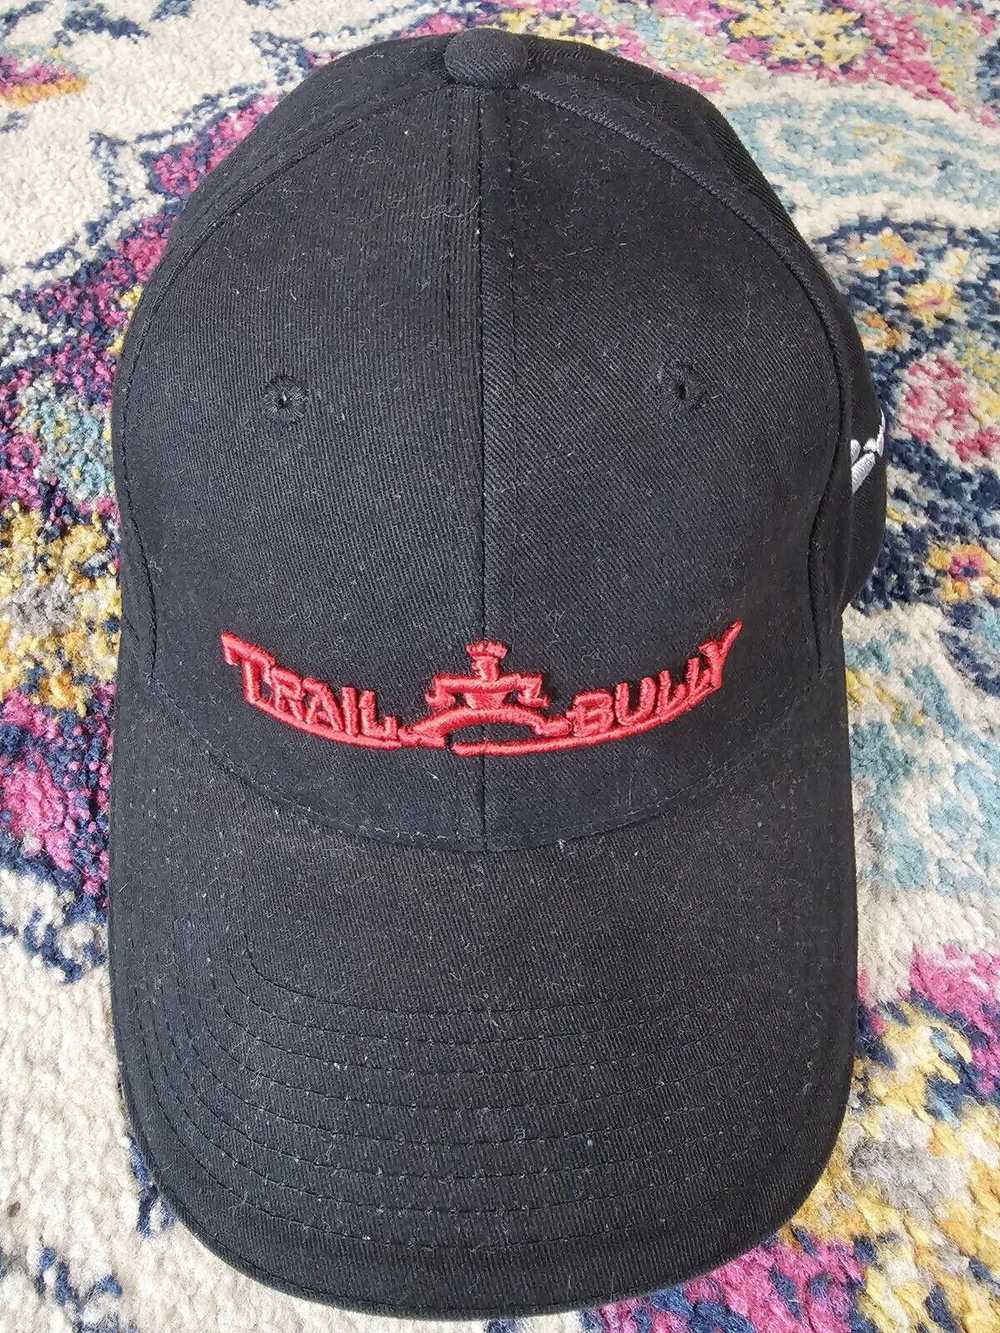 Designer PistenBully "Trail Bully" Hat Black OSFA… - image 2